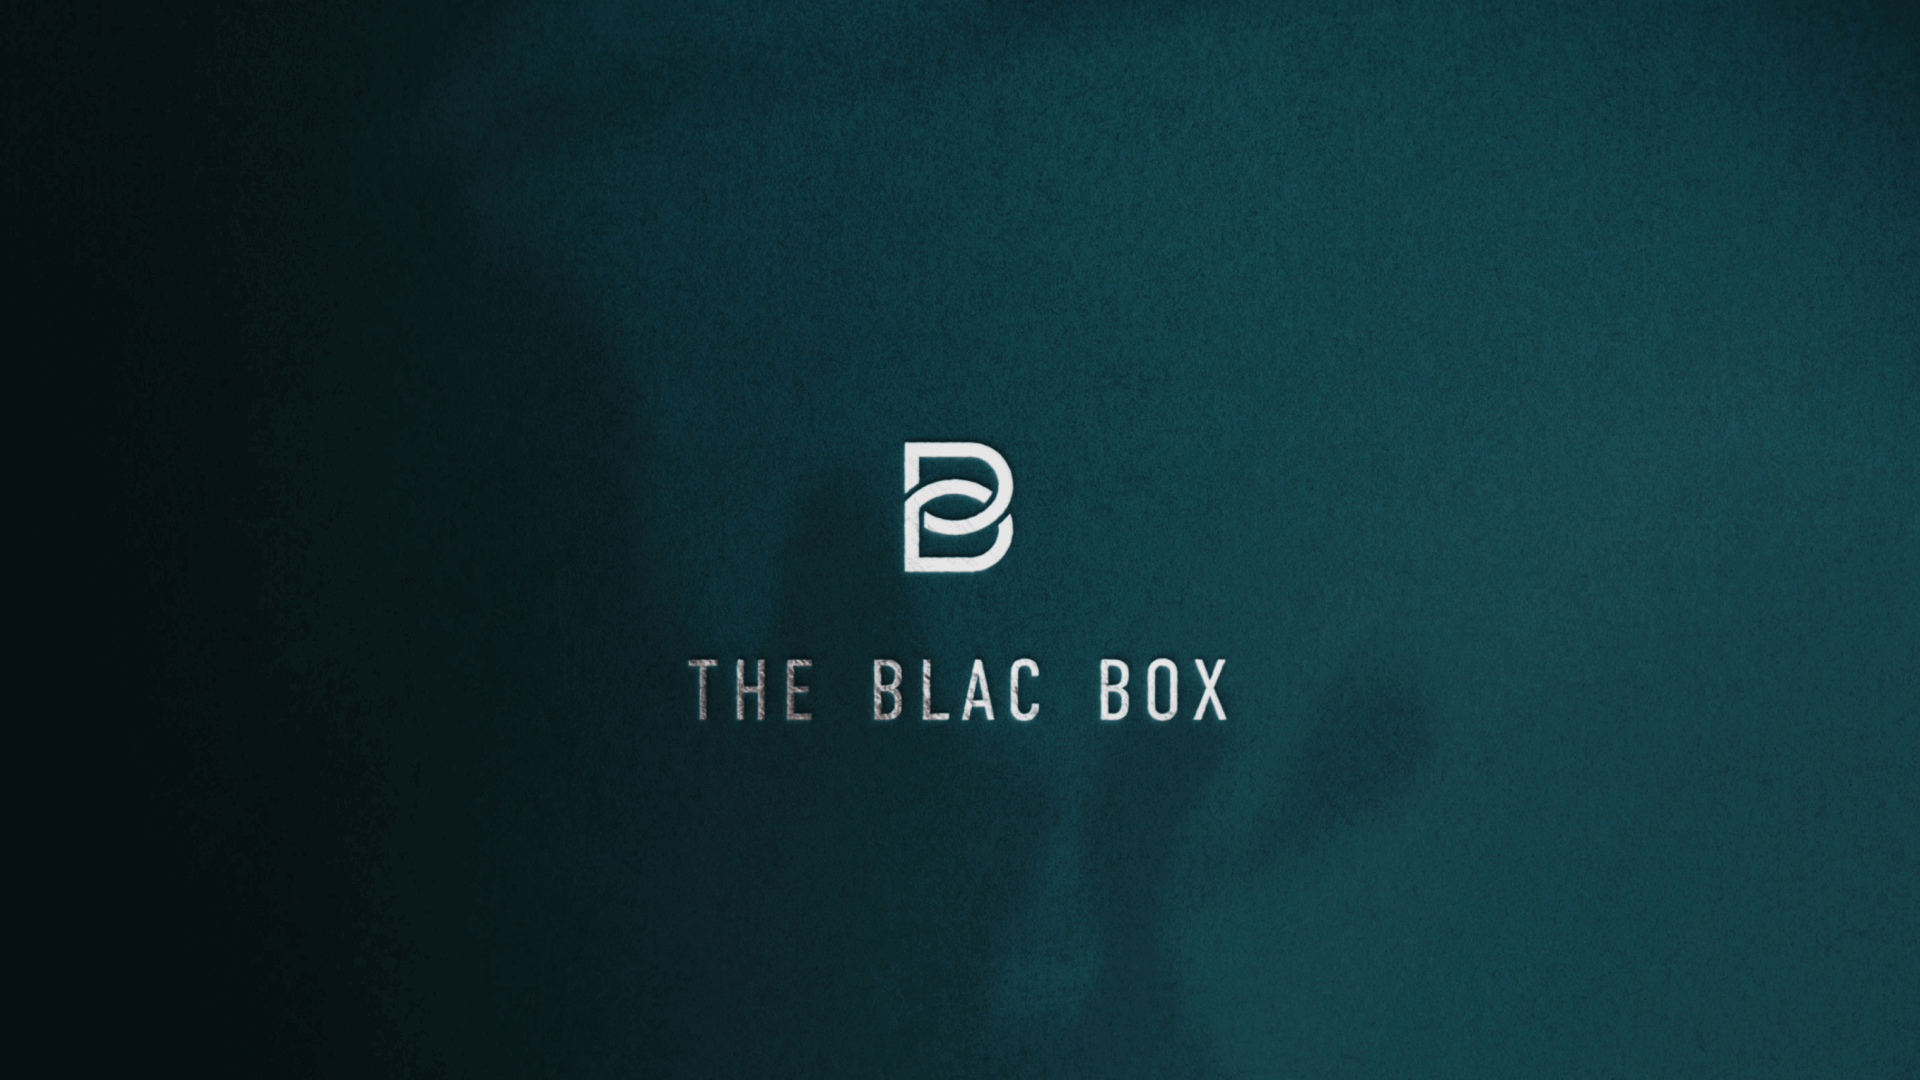 The Blac Box